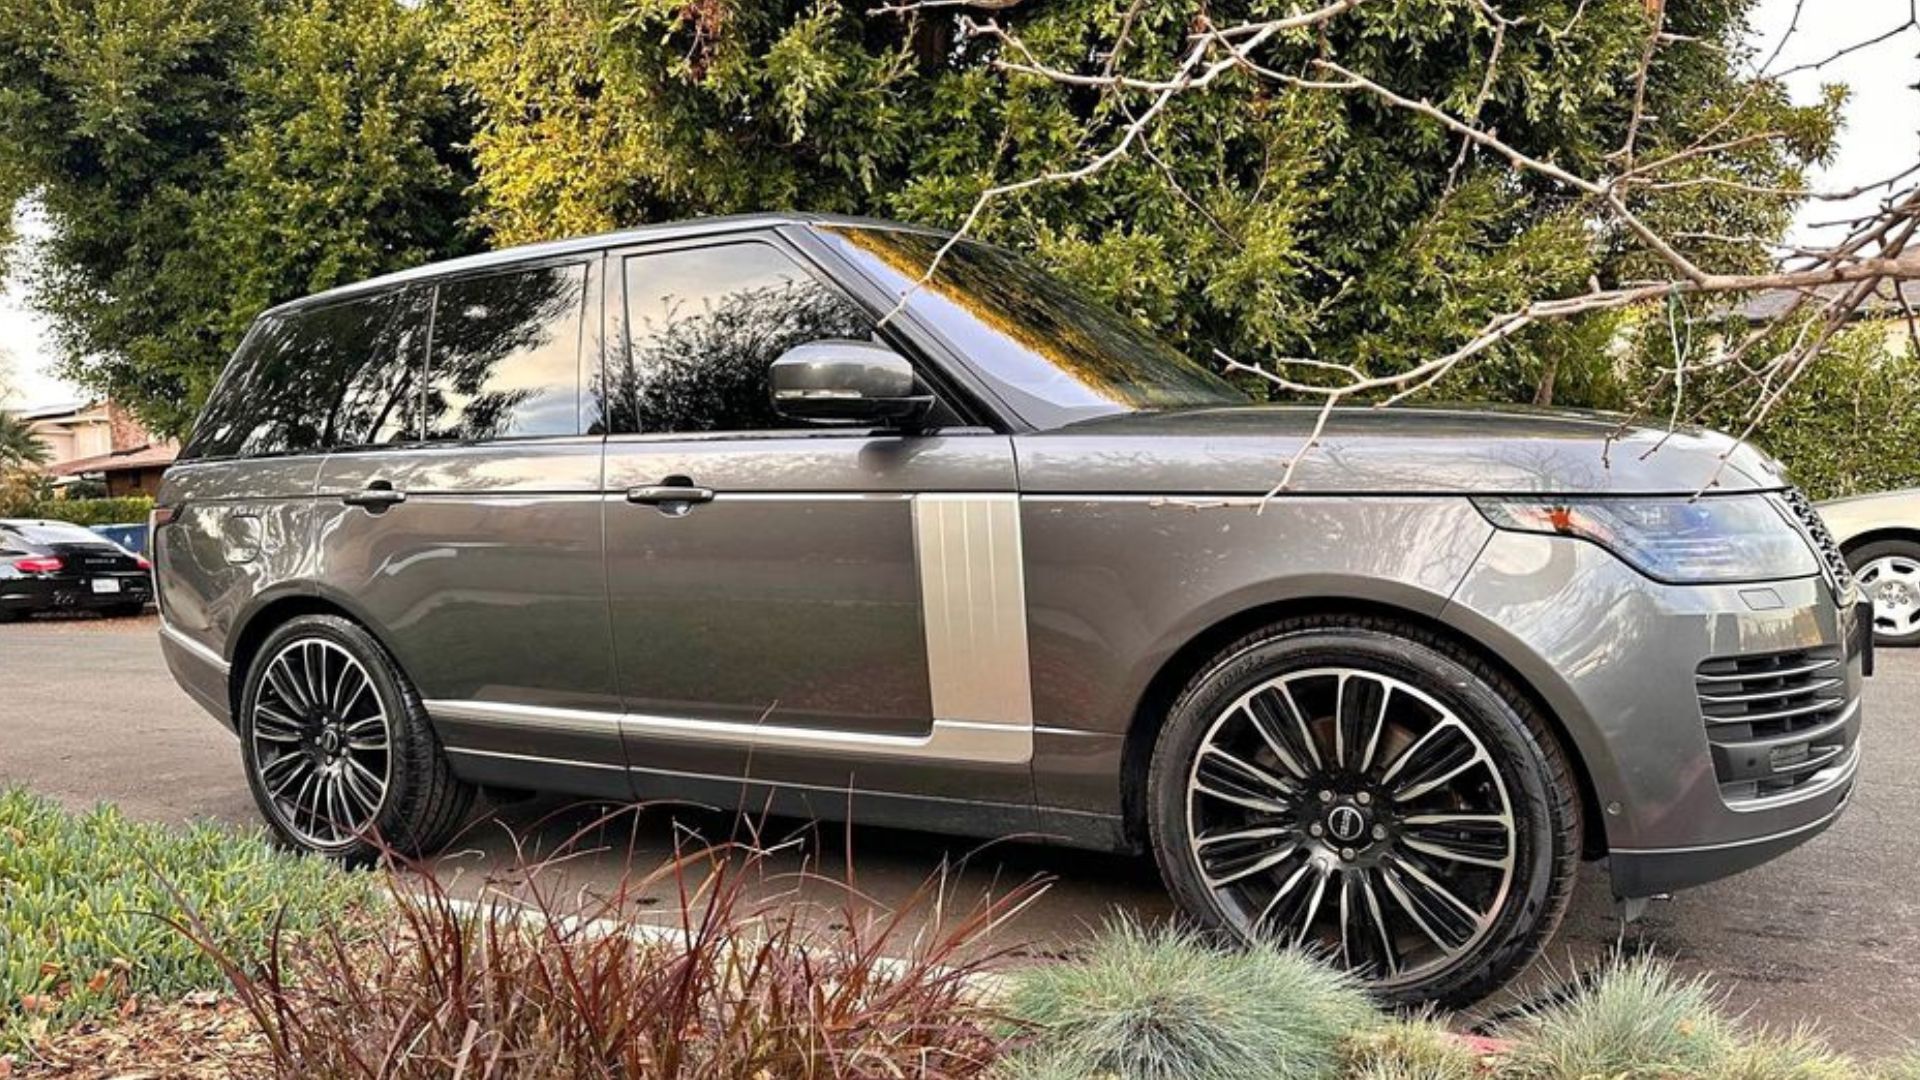 Range Rover Stolen Day After Owner Unloads It